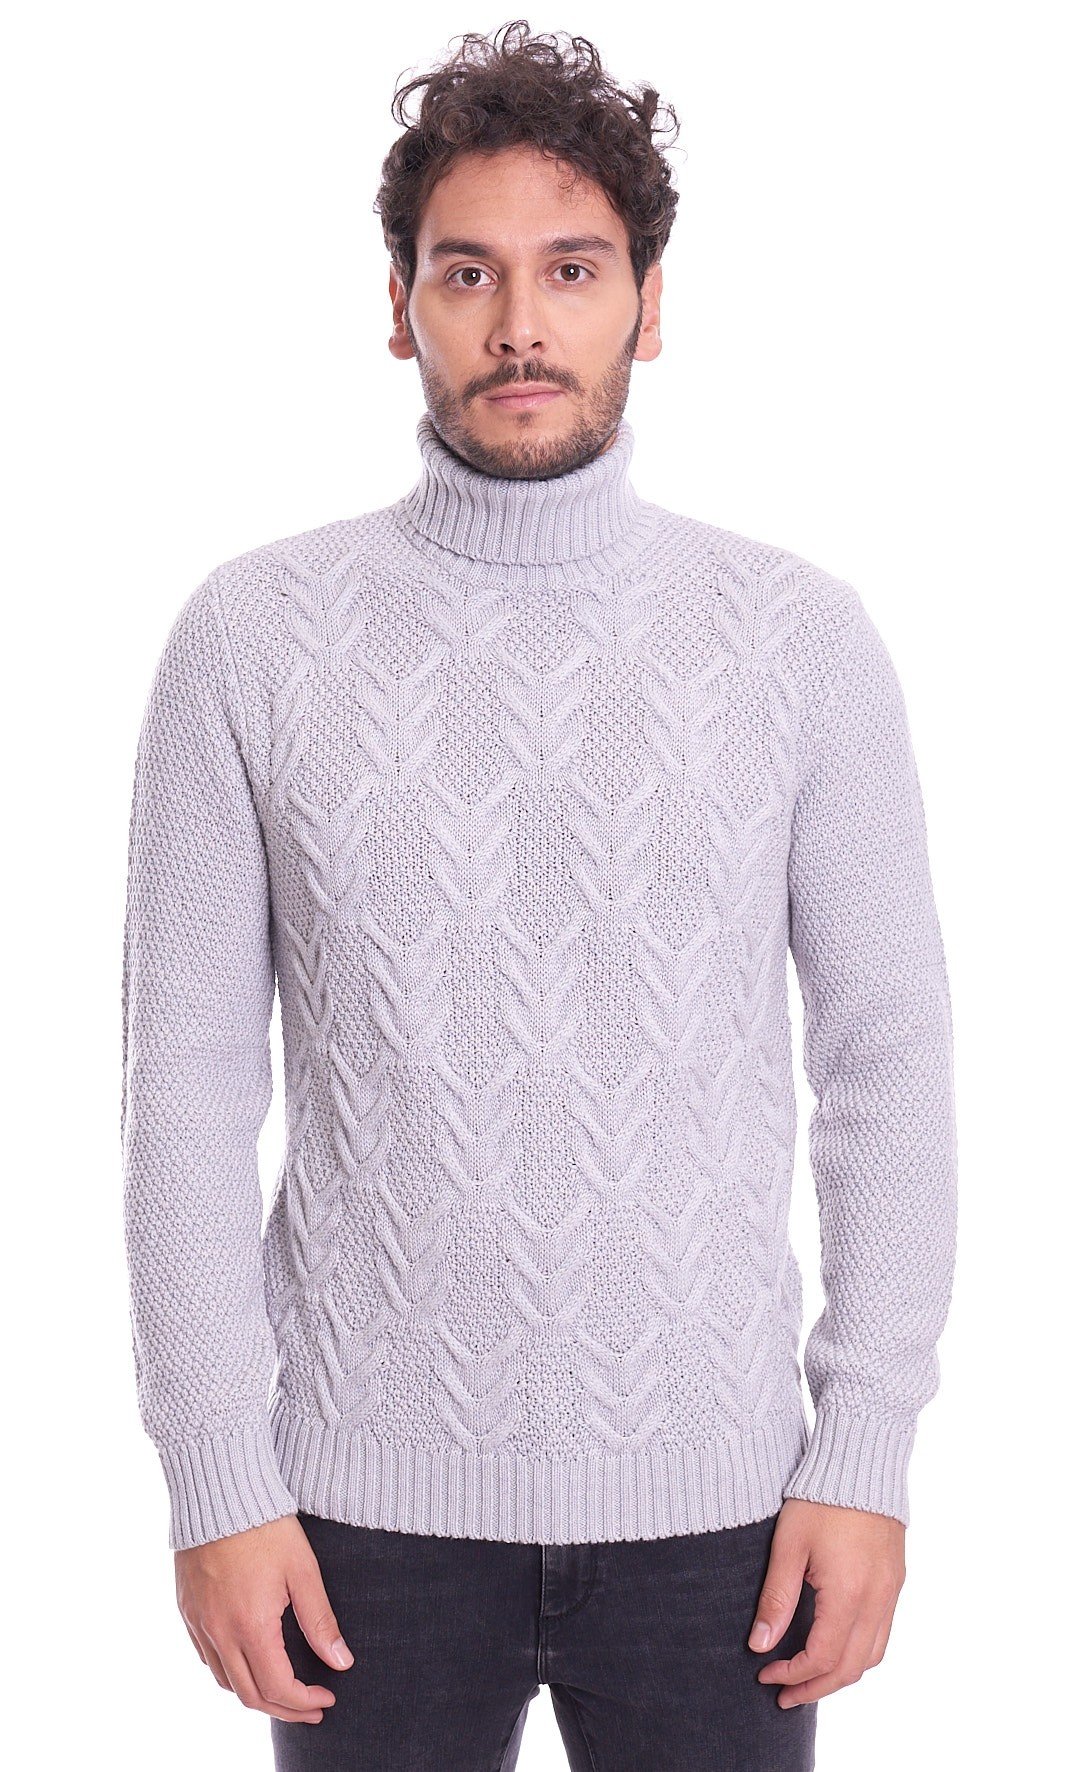 Men's turtleneck sweater Heritage pure merino wool grey